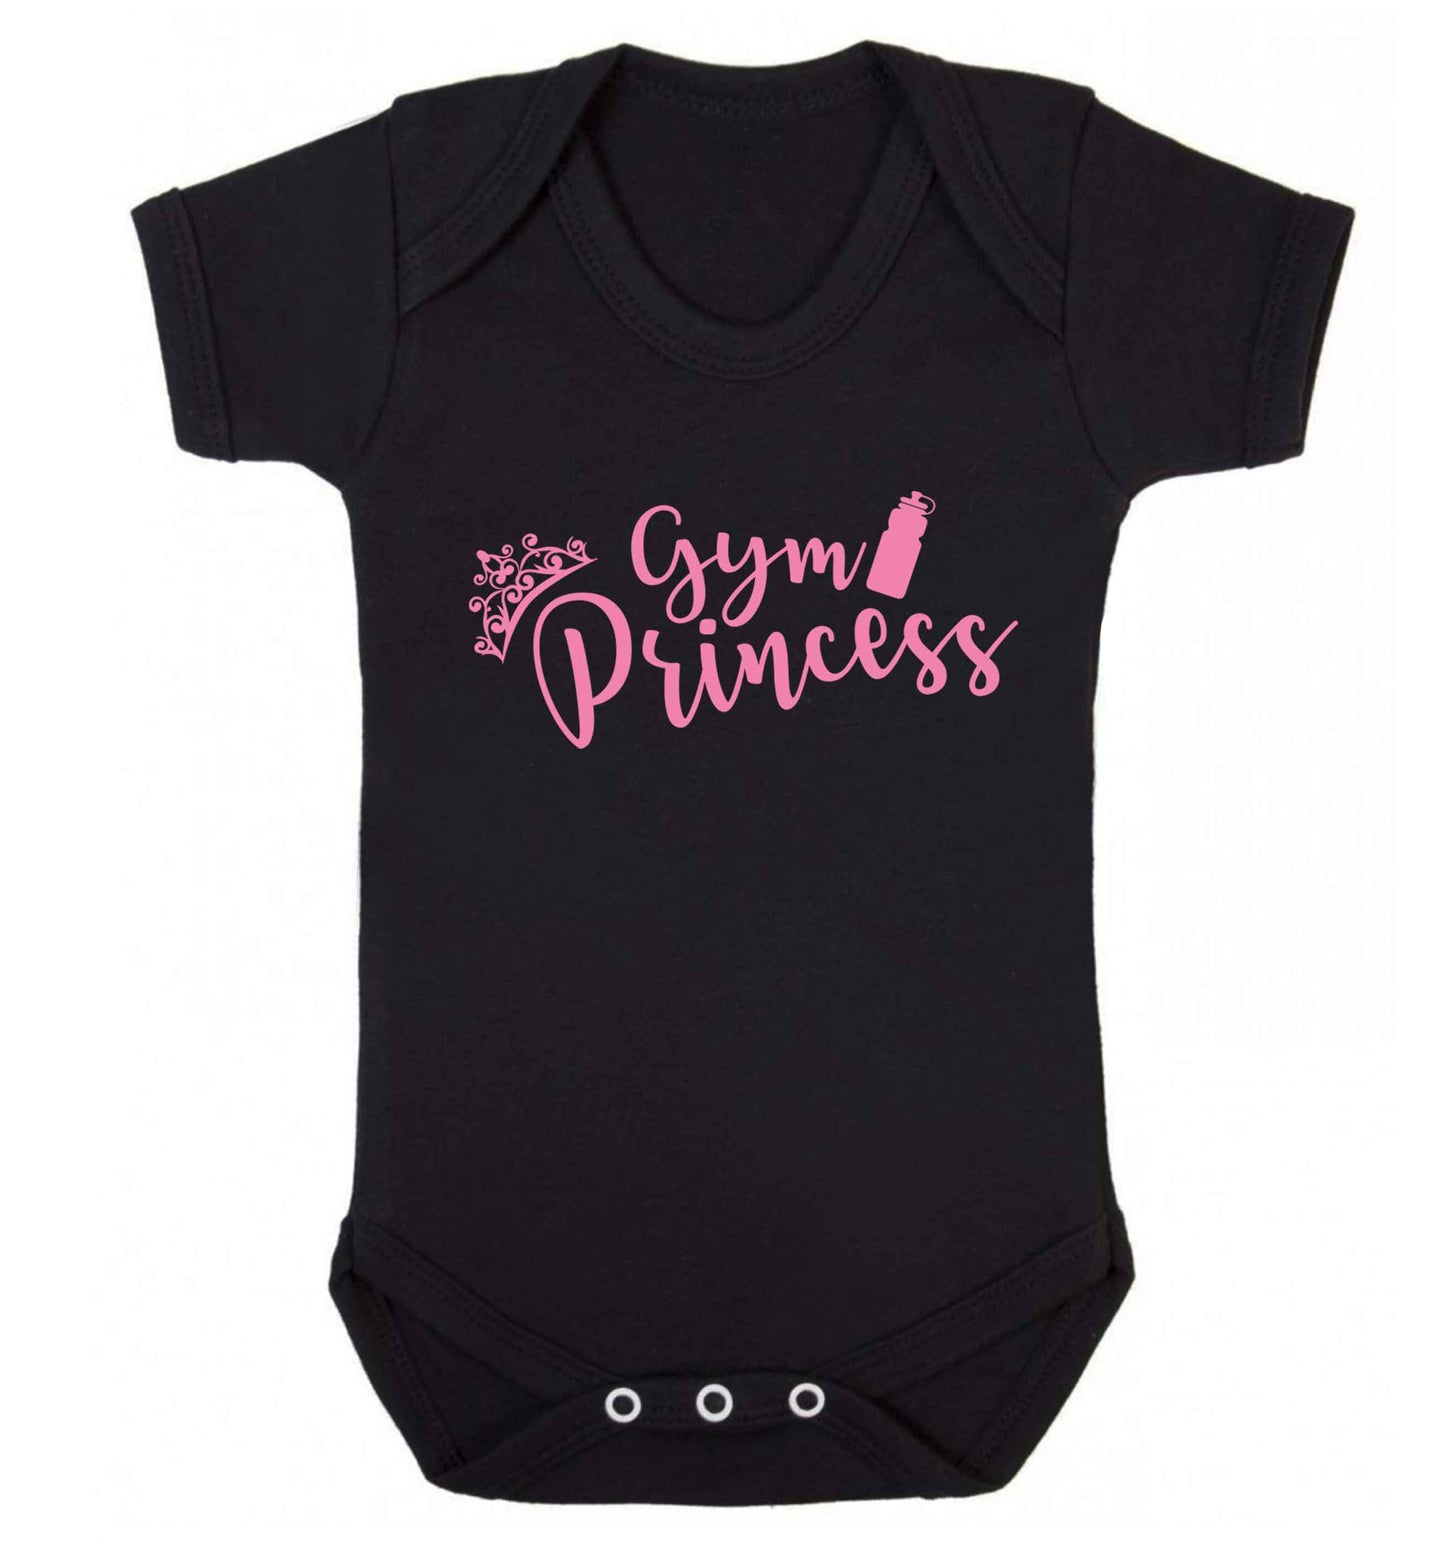 Gym princess Baby Vest black 18-24 months